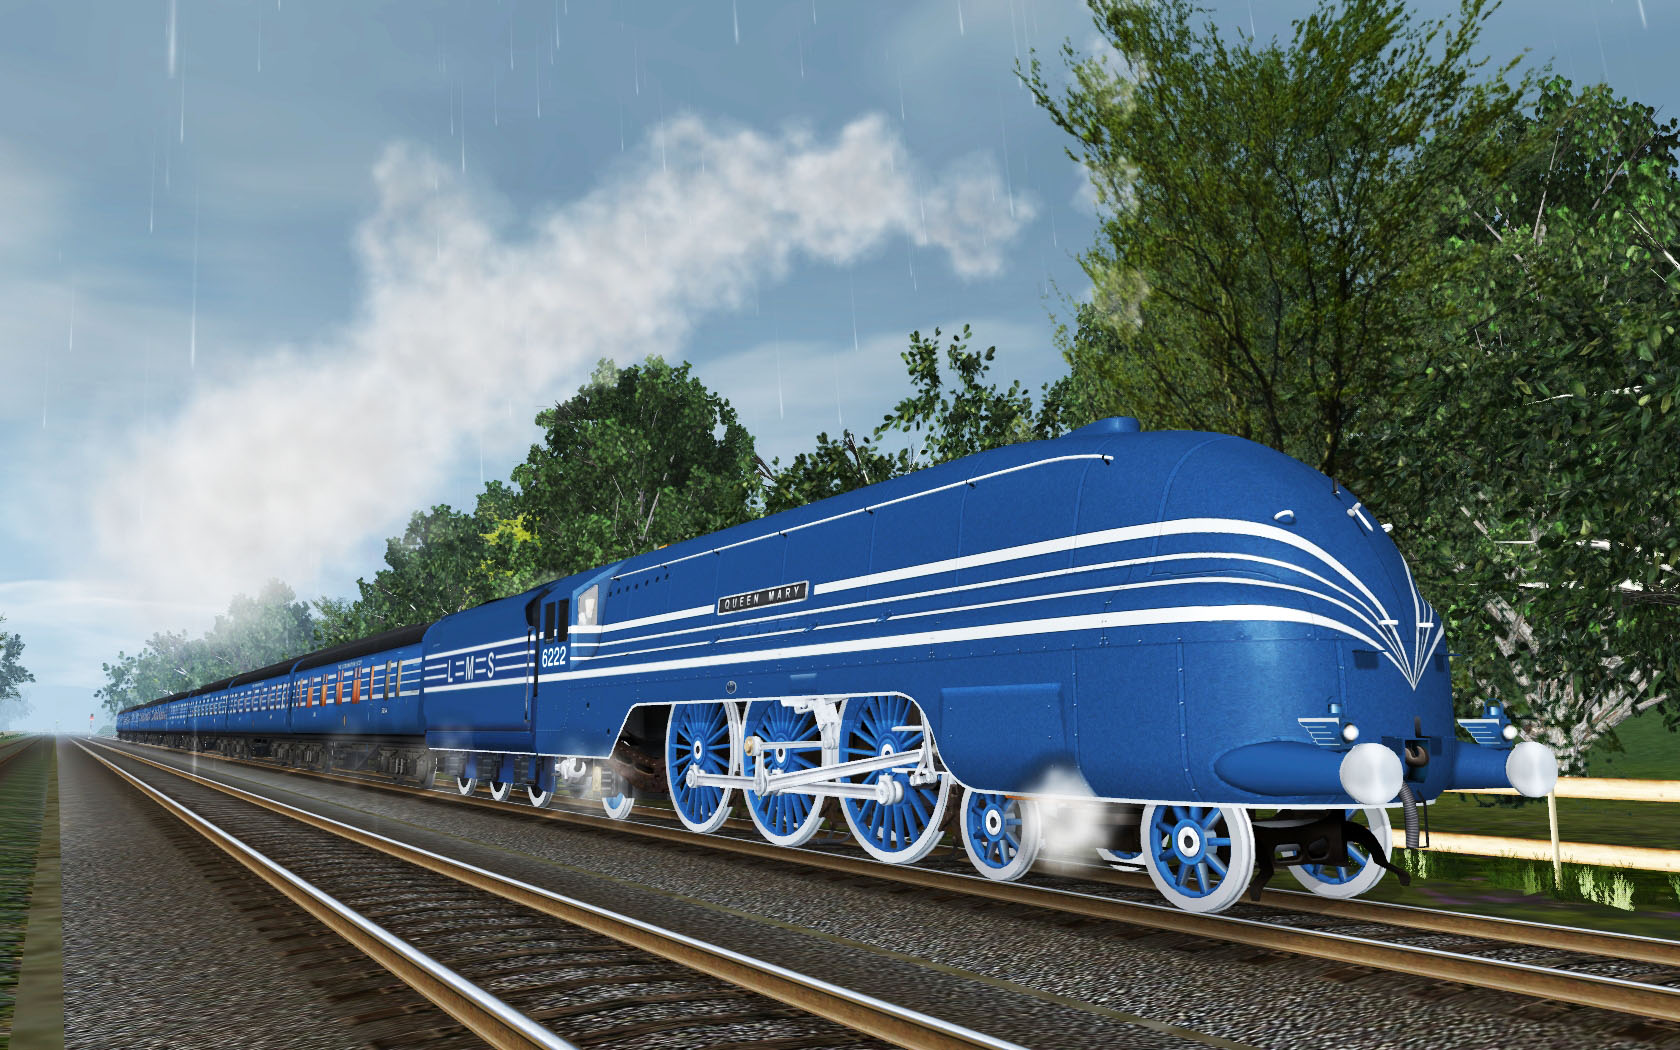 TANE DLC: Orient Express Trainset on Steam